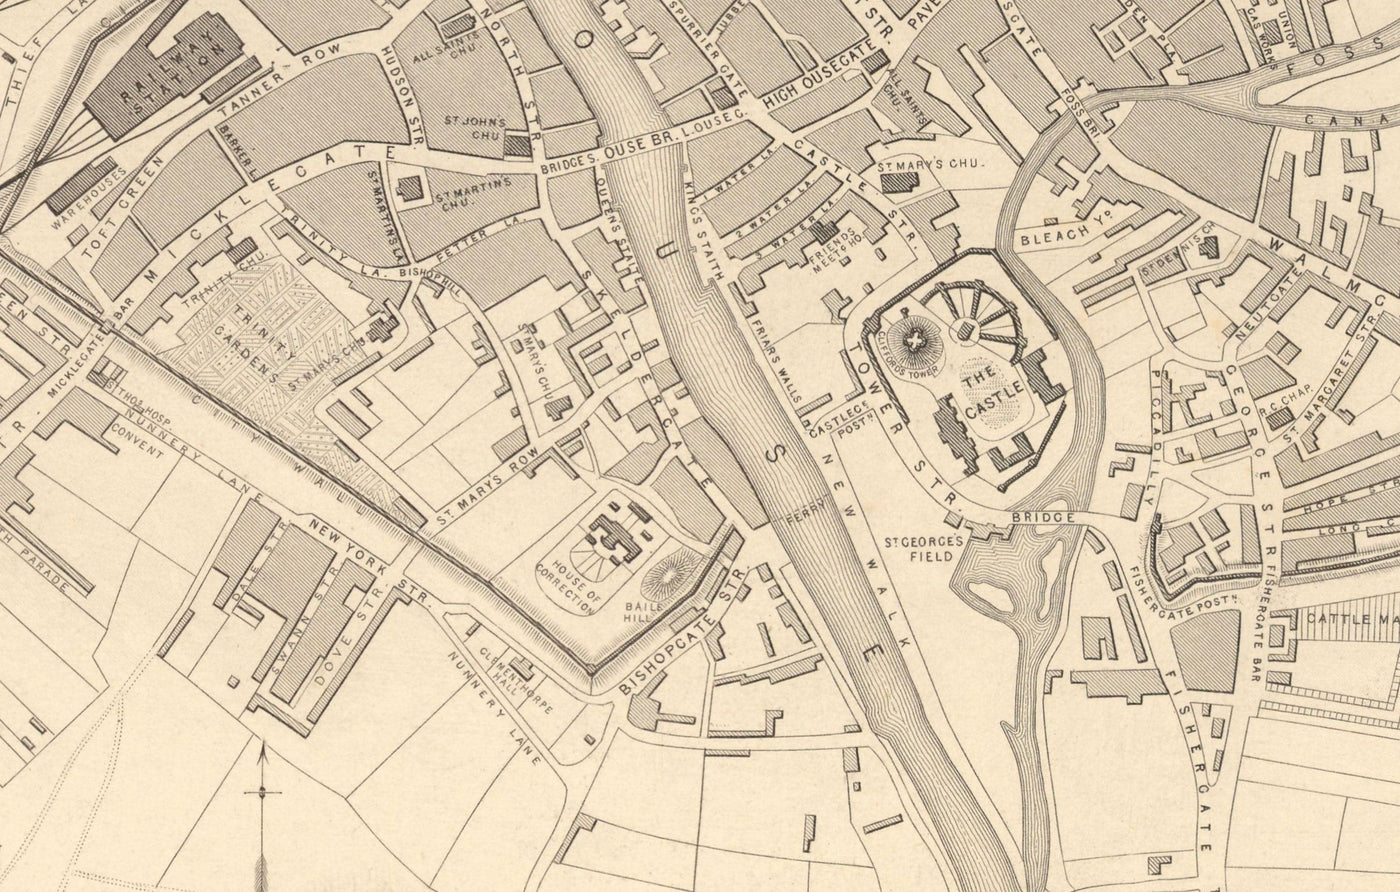 Old Map of York en 1851 por Tallis & Rapkin - City Center Chart, York Minster Cathedral, Río Ouse